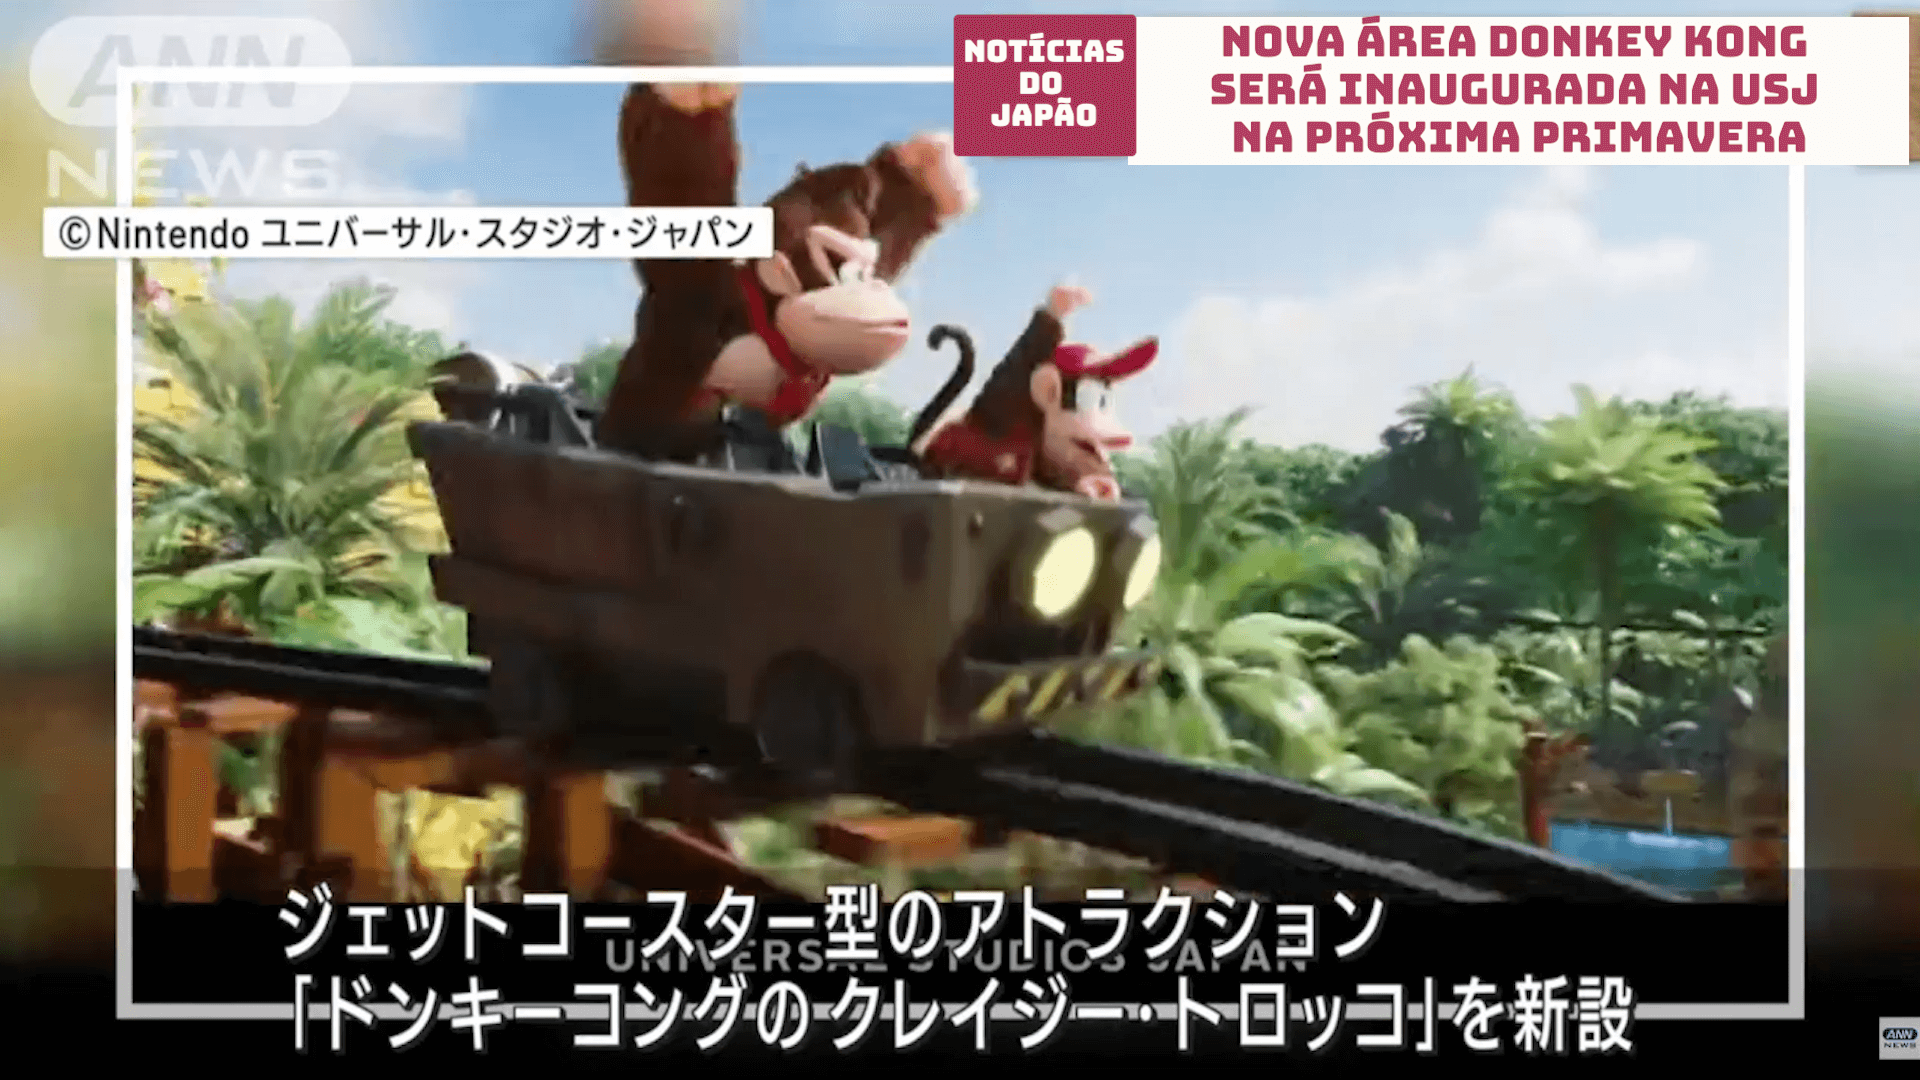 Nova área Donkey Kong será inaugurada na Universal Japan na próxima primavera